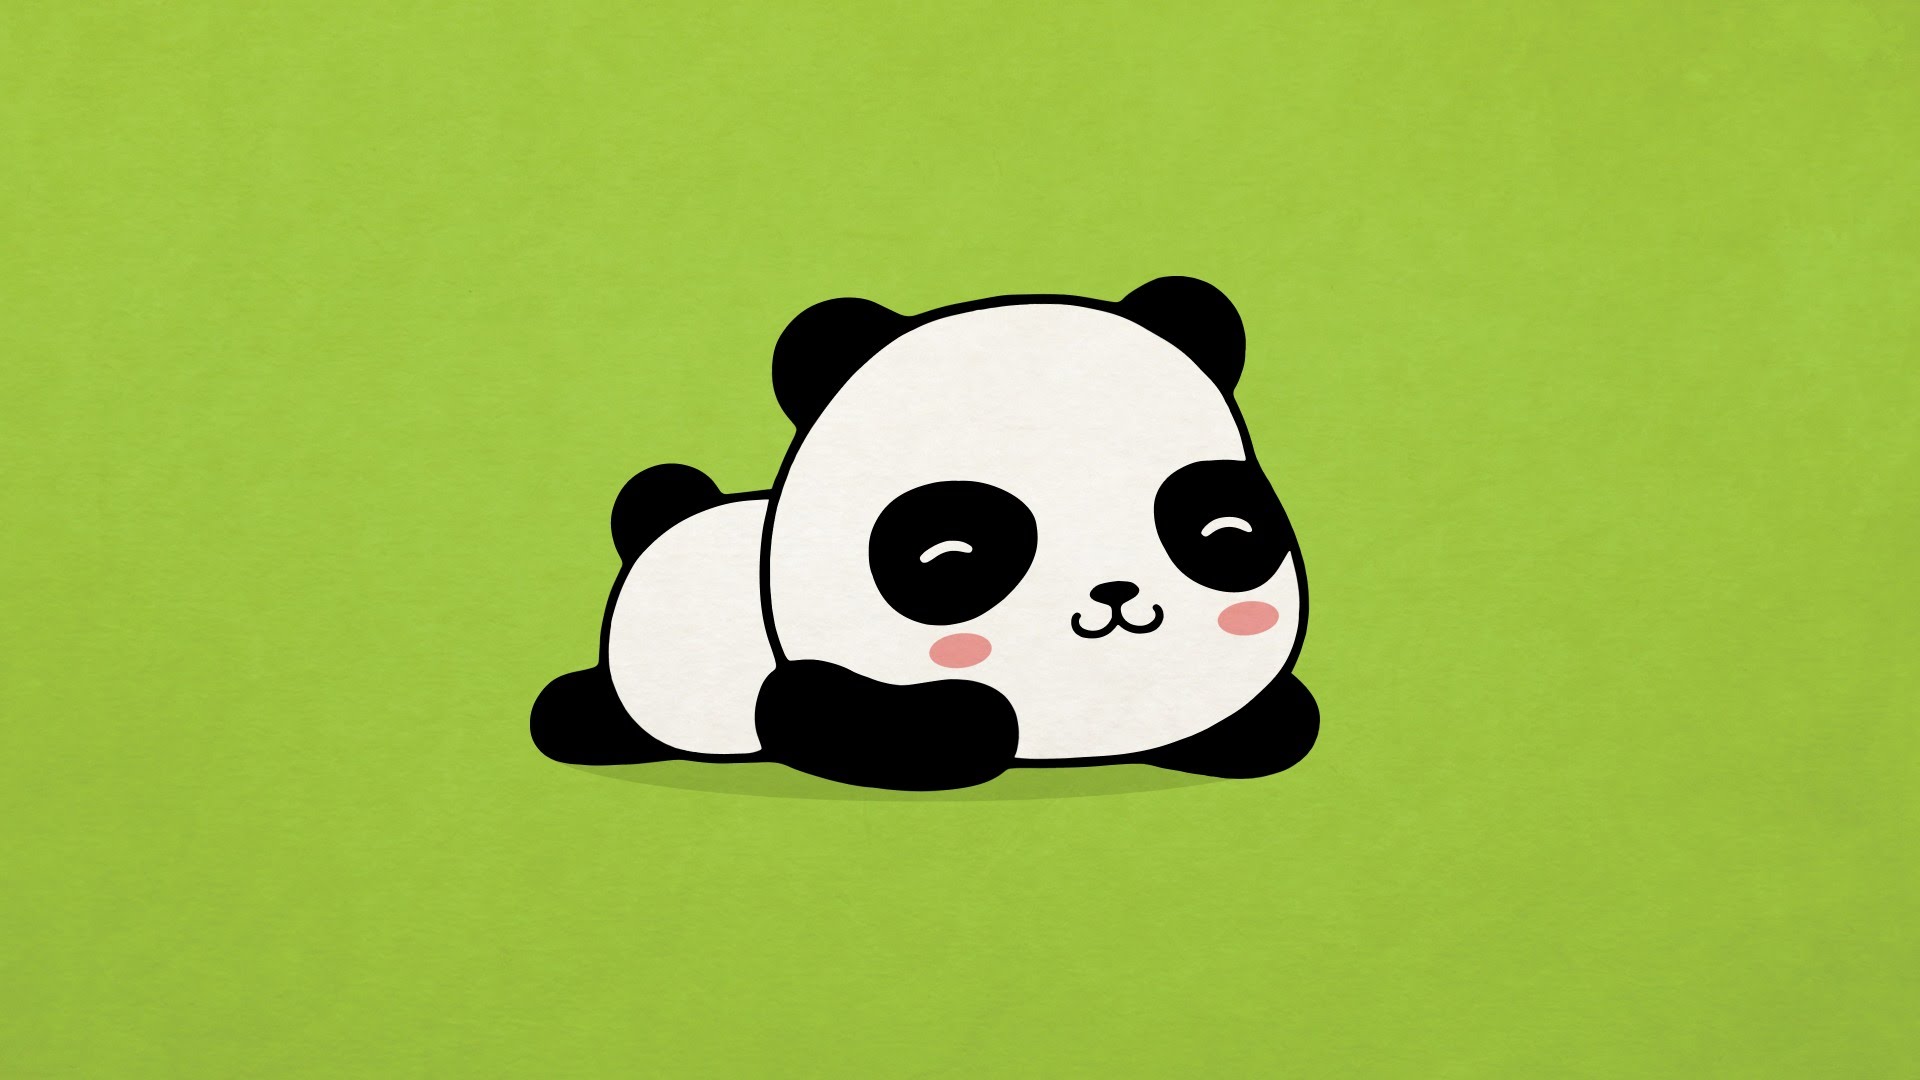 How To Draw] A Cute Sleepy Panda - YouTube